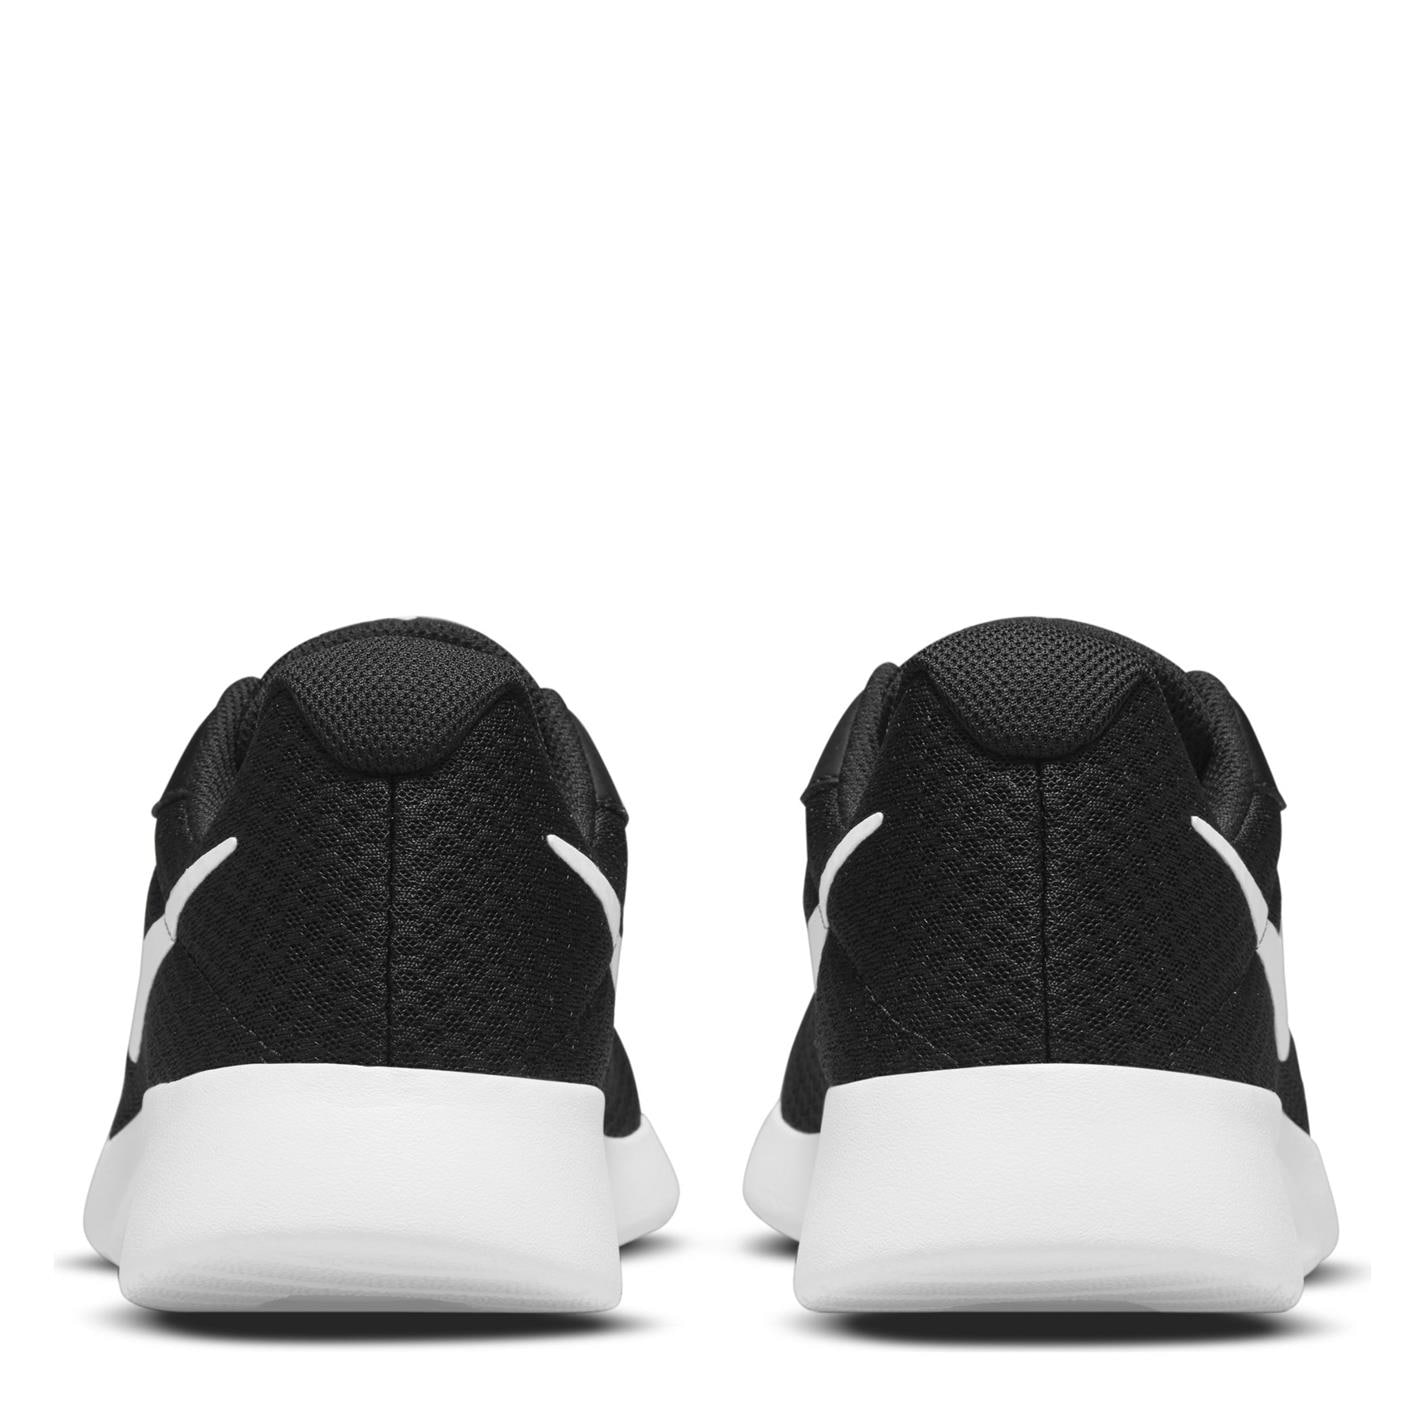 Adidasi sport Nike Tanjun NN pentru Barbati negru alb